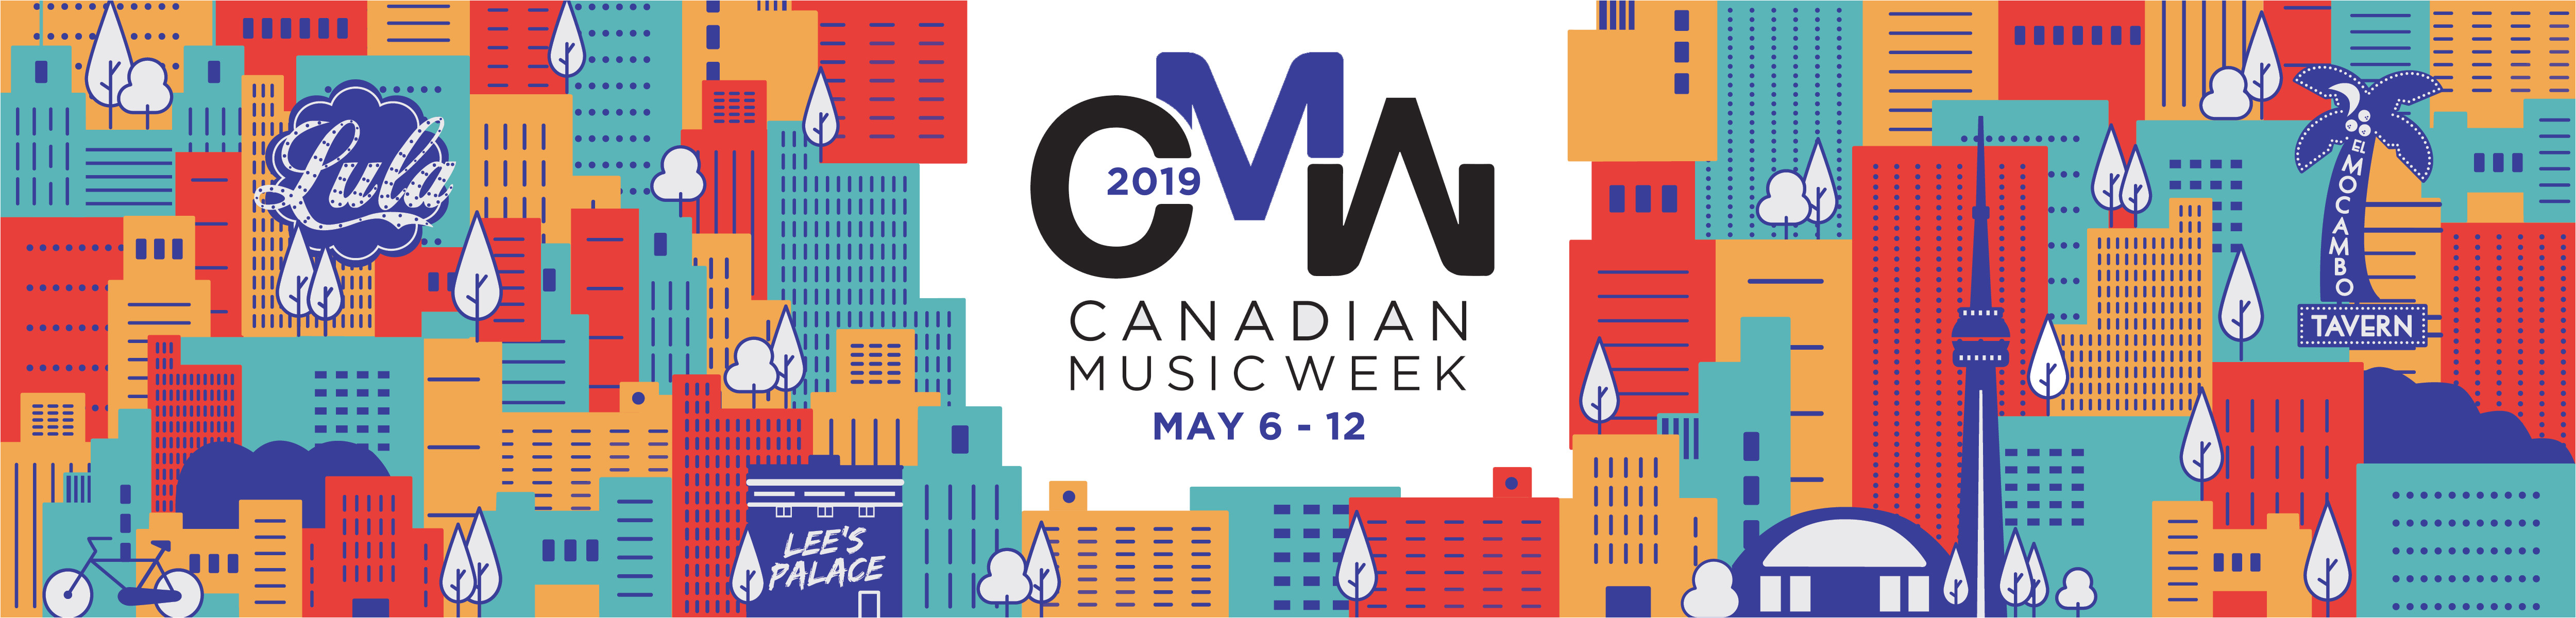 2019 canadian music week may 6 12 2019 logo